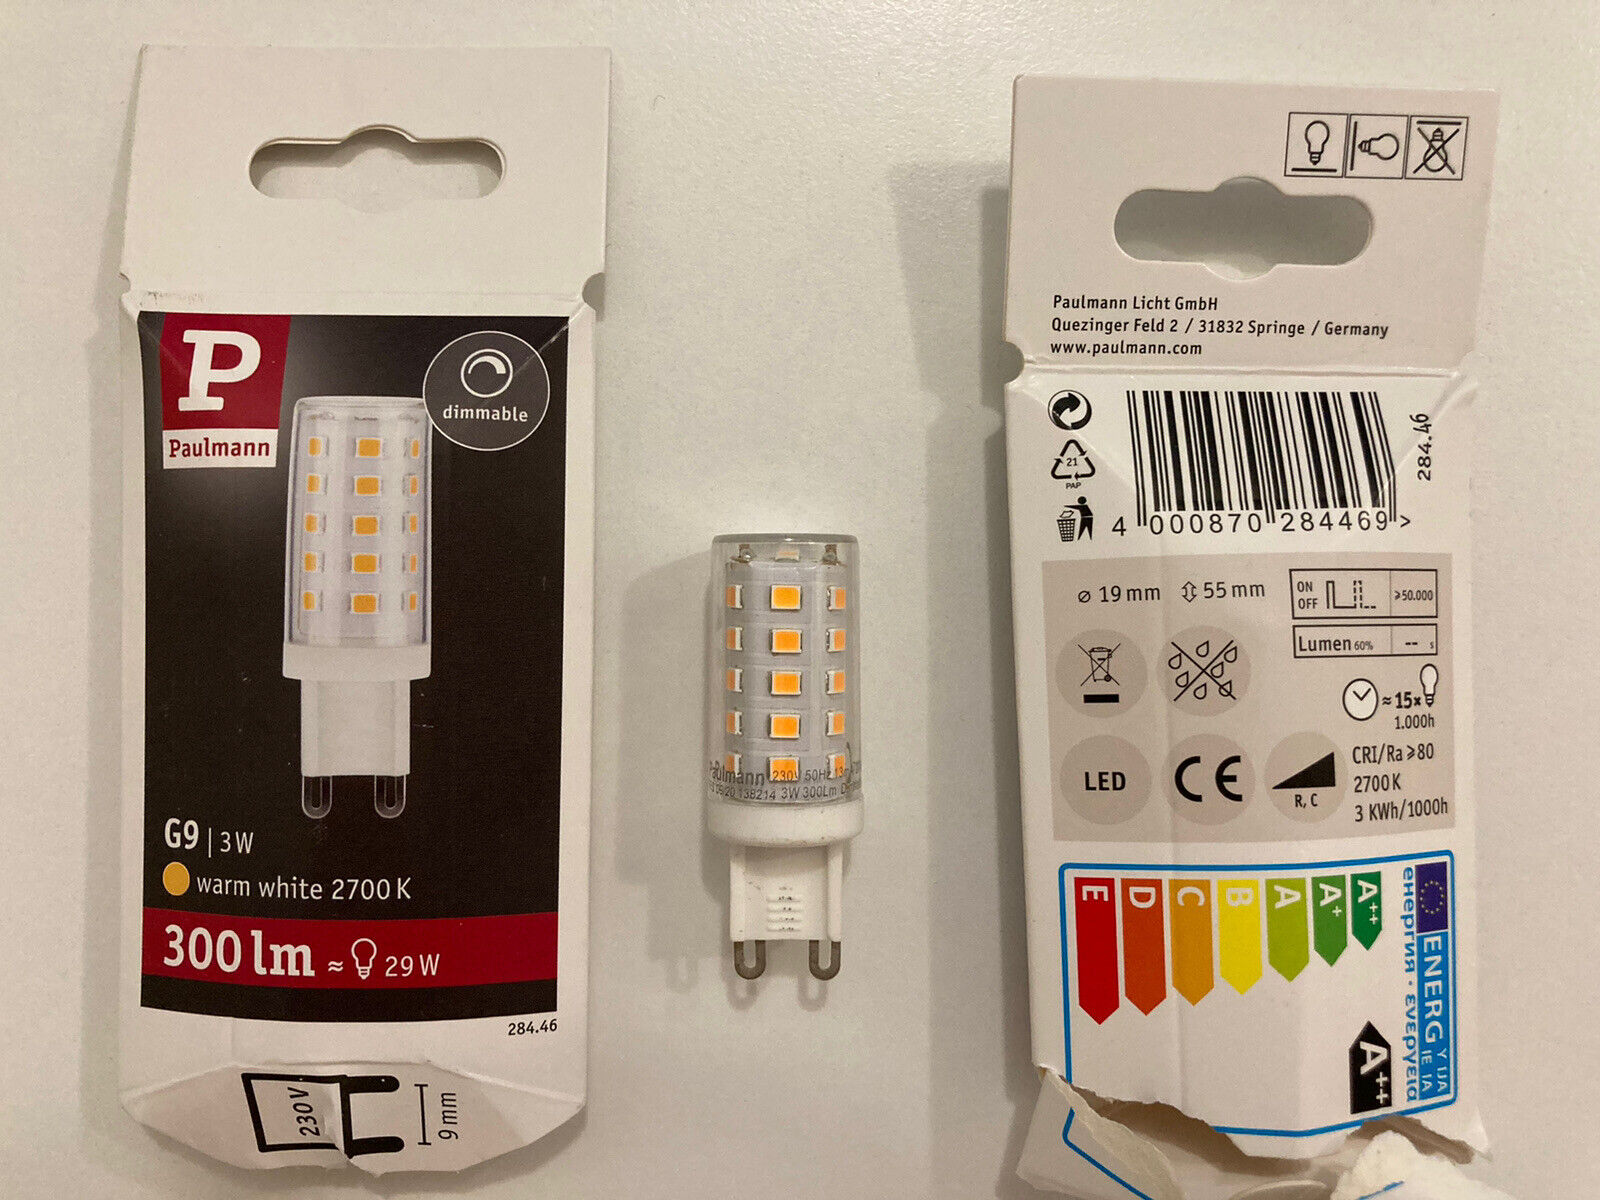 Paulmann LED - 3 Watt - Pin Socket G9 - warm white 2700K - dimmable | eBay